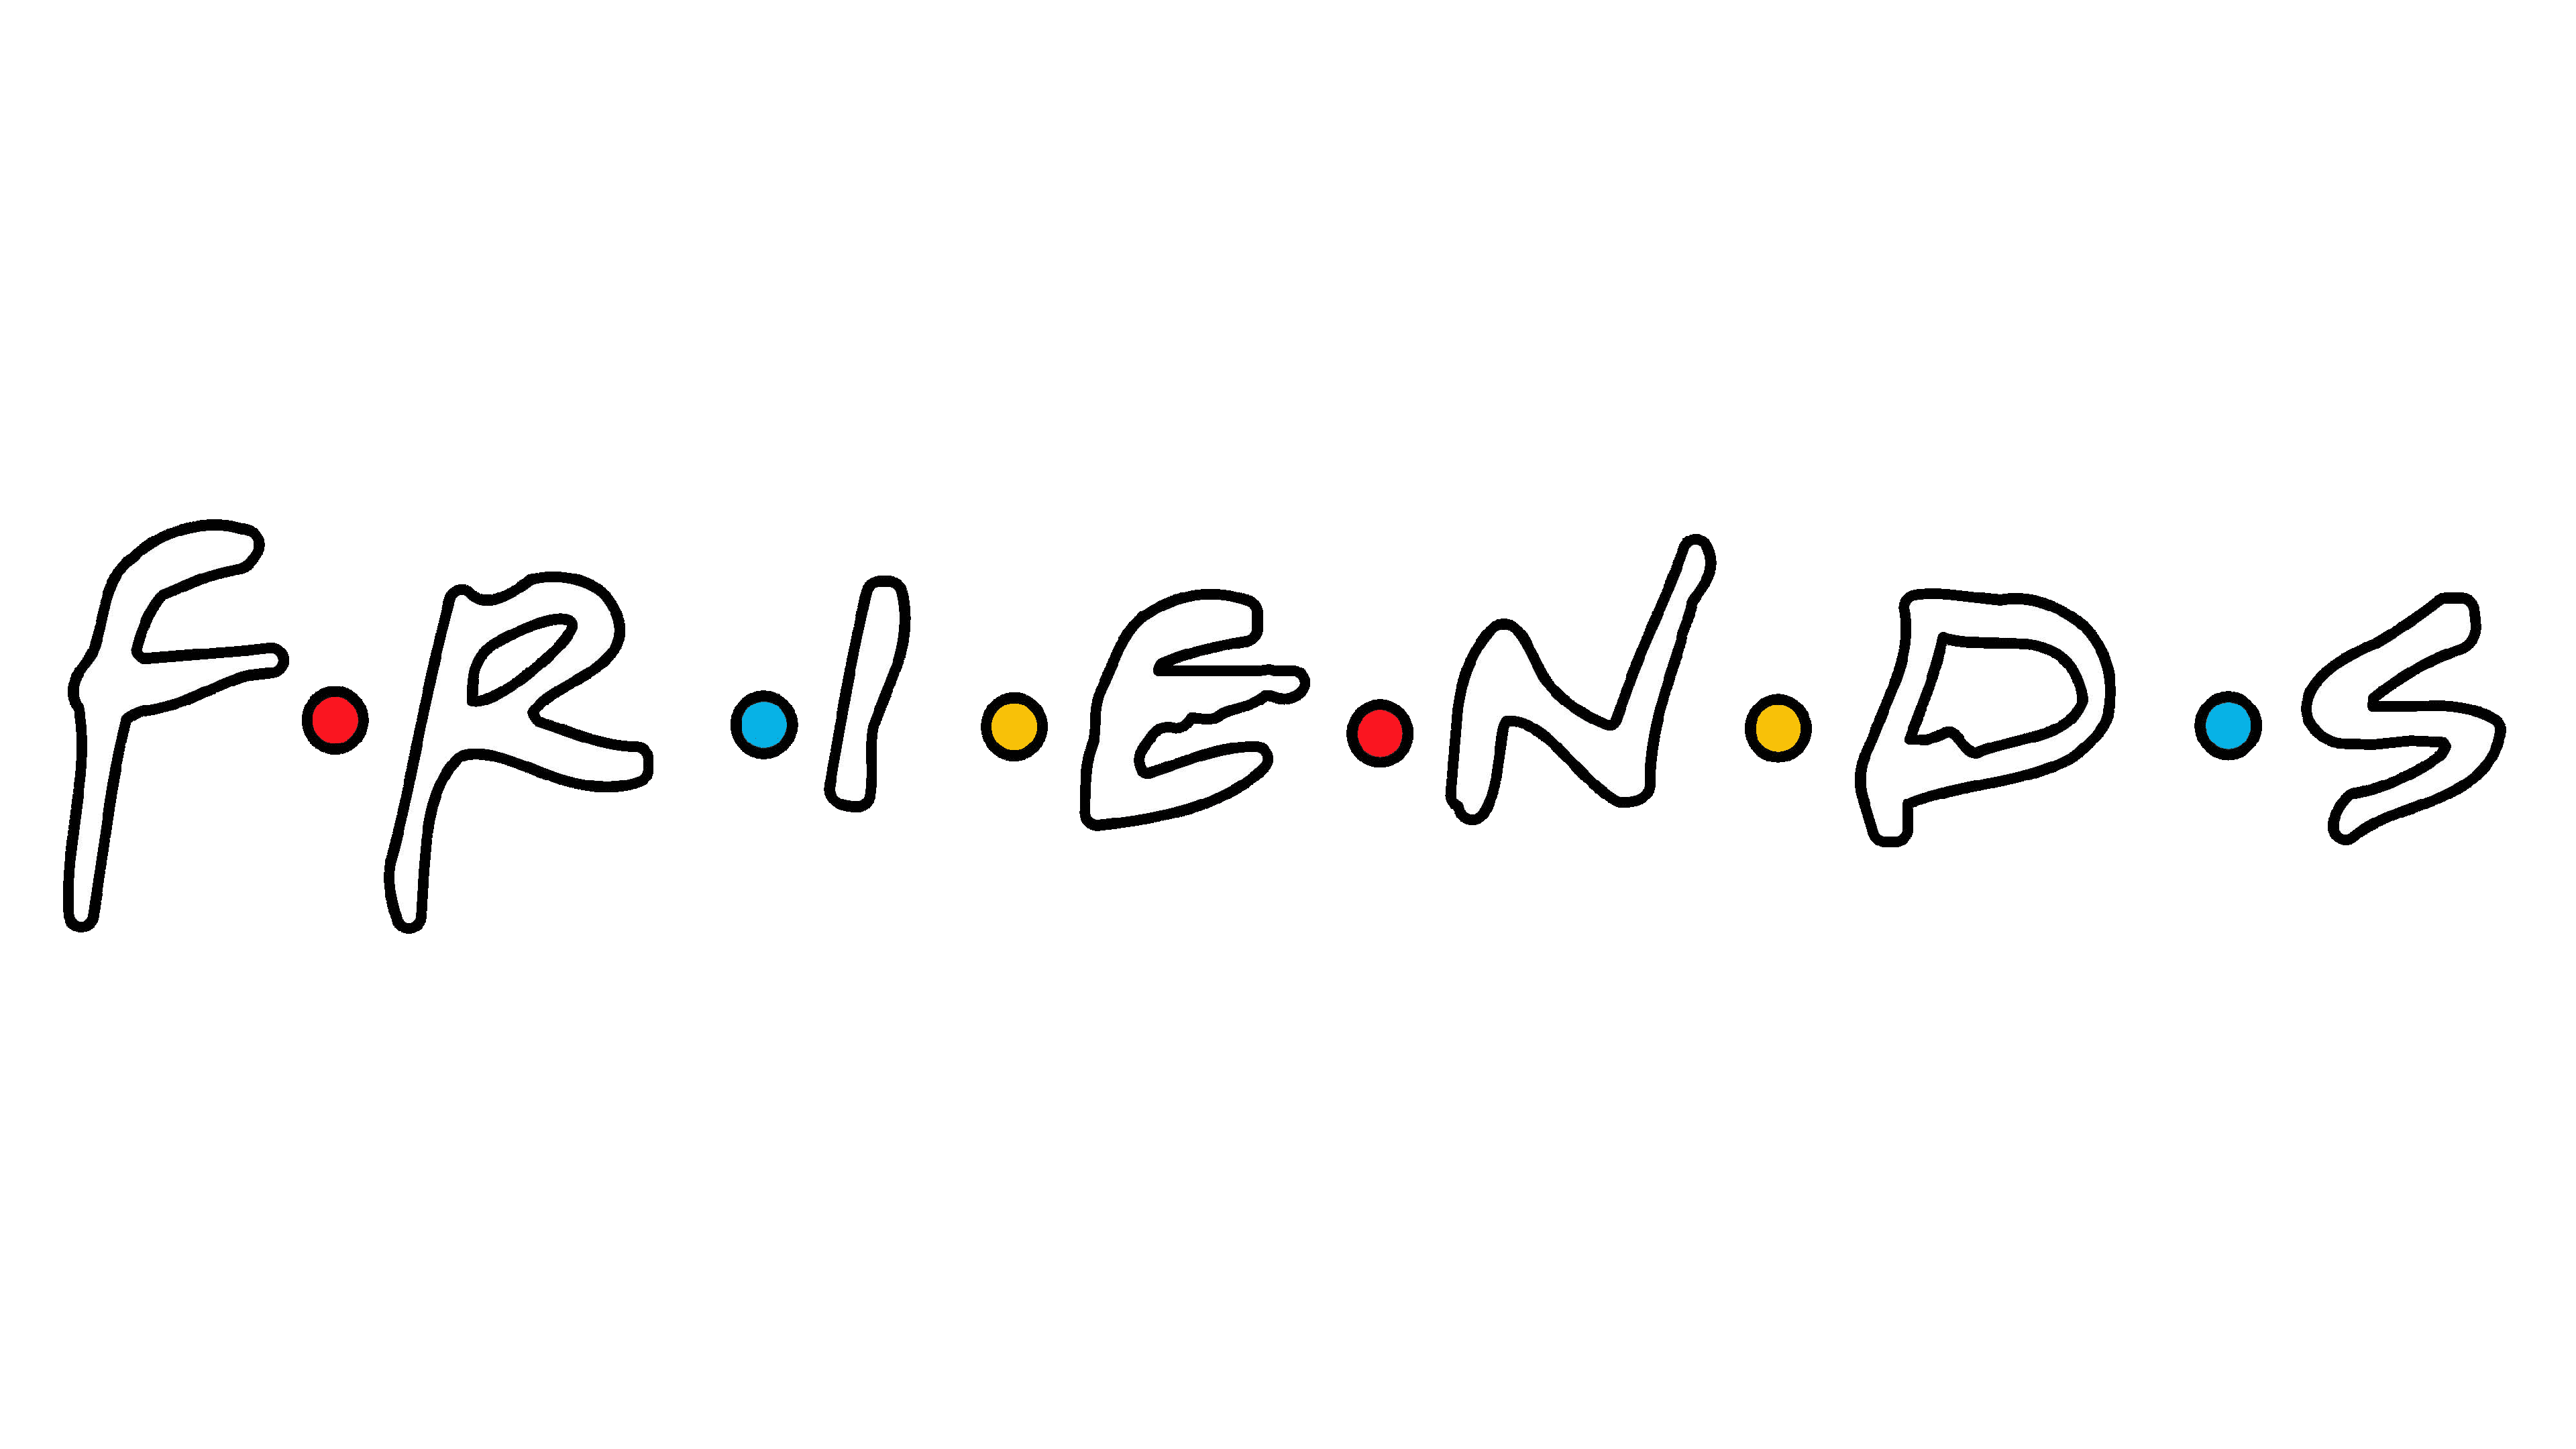 friends series logo